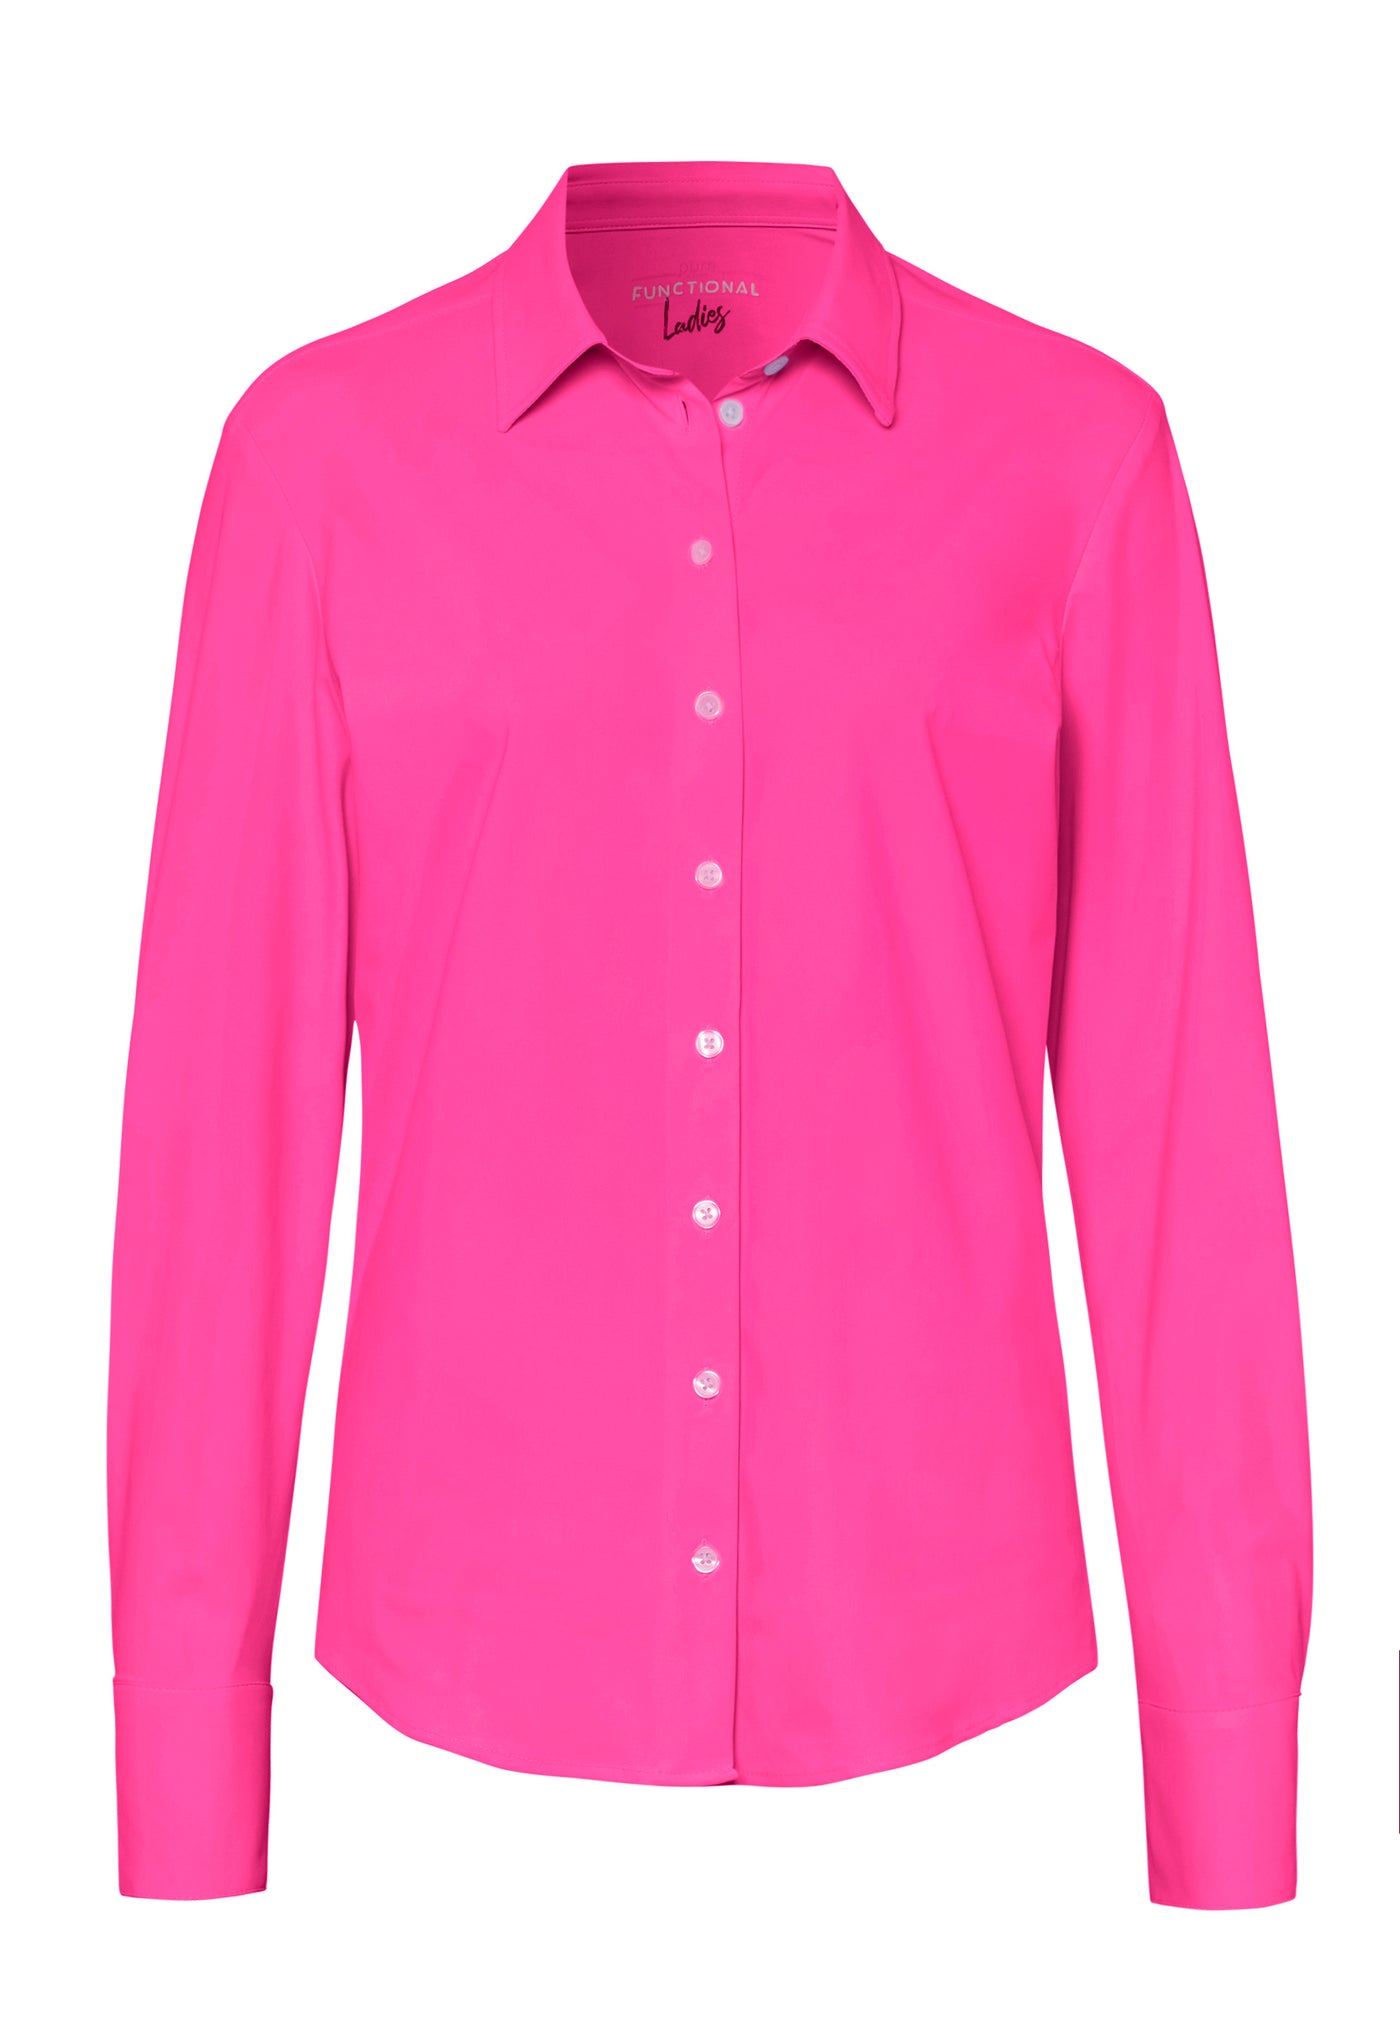 D81350-91910 - Functional Bluse slim fit - pink